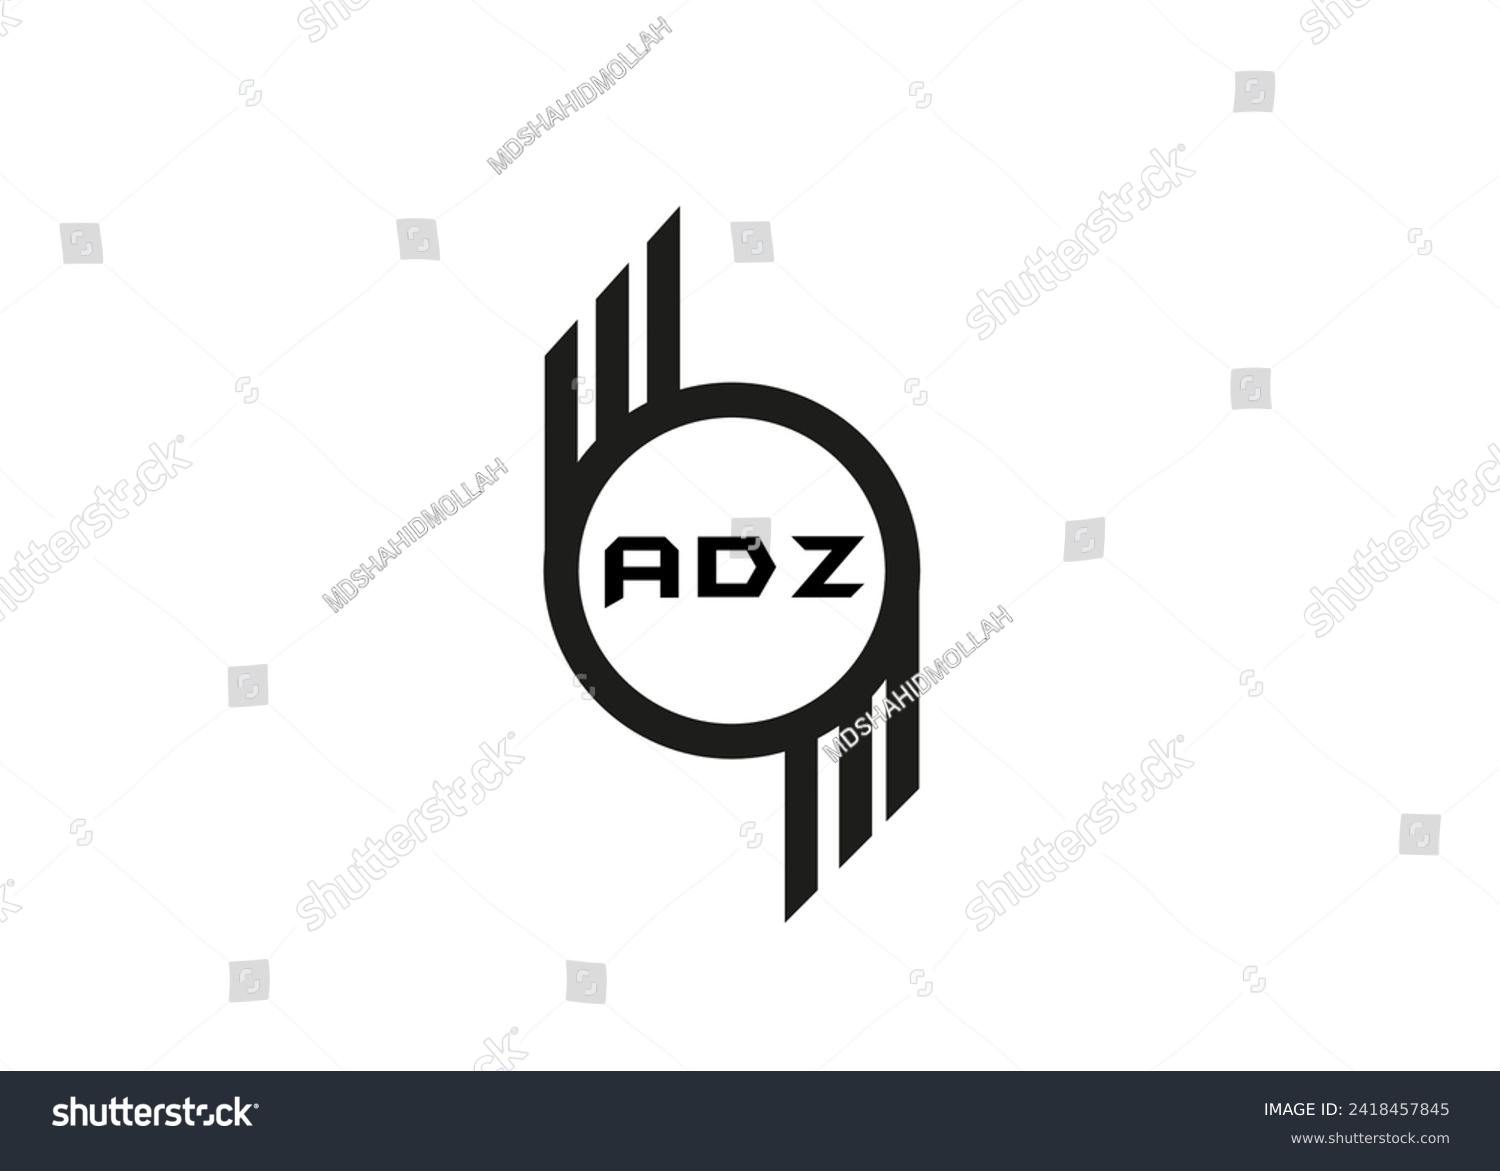 SVG of ADZ letter logo design white color background.a d z icon and logo svg